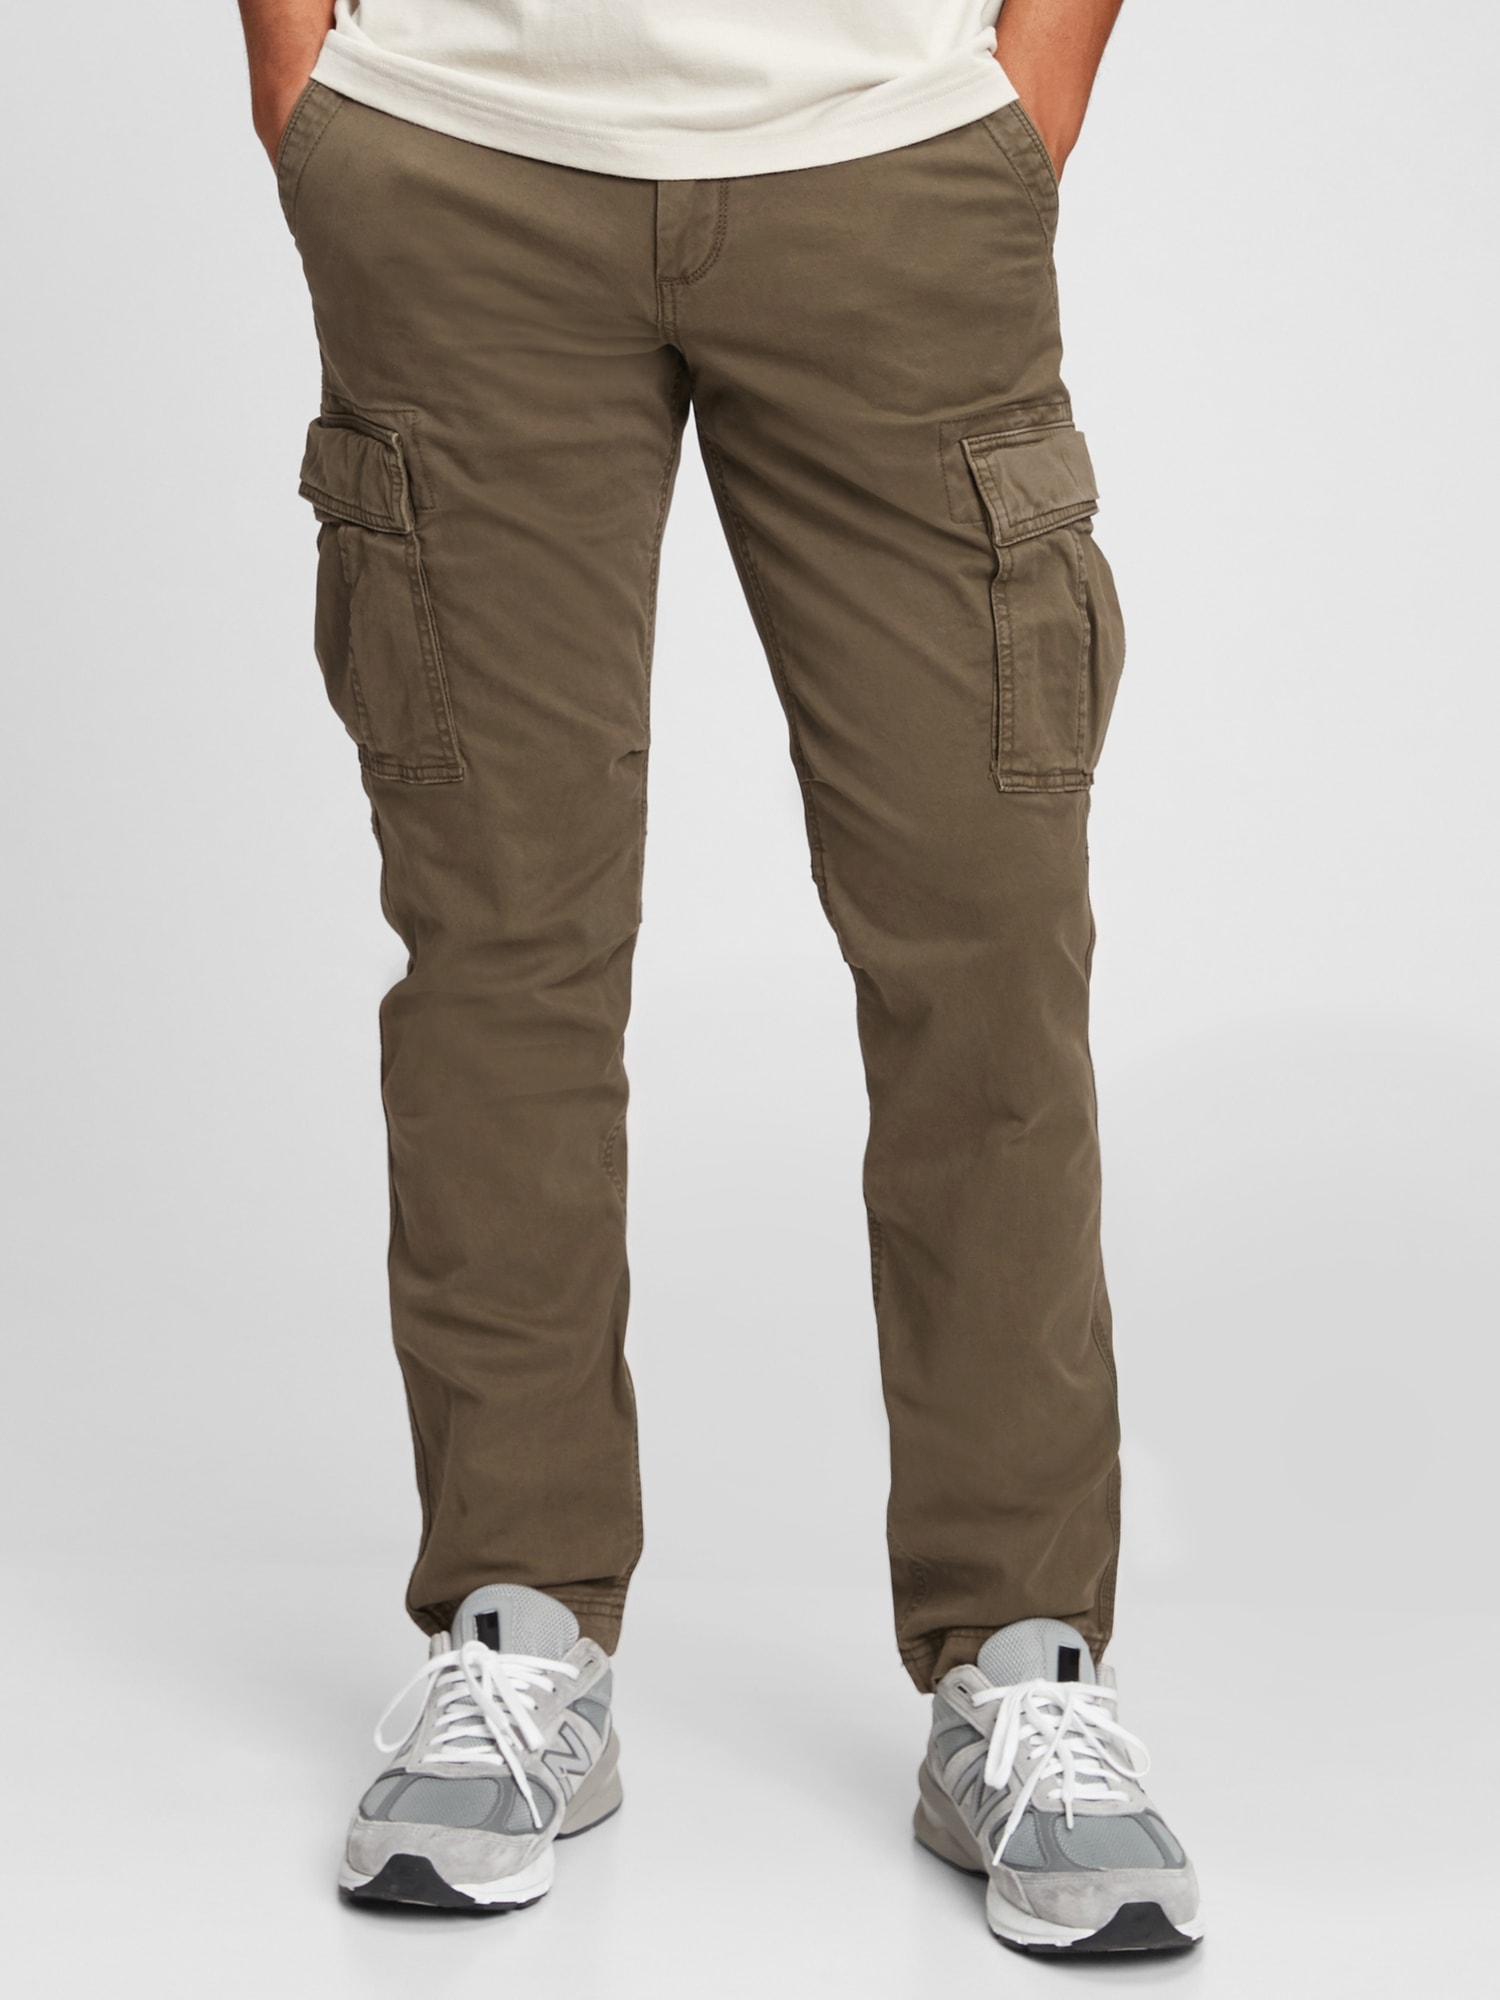 CAYL 8 pocket hiking pants : BLACK - GRAY SHOP